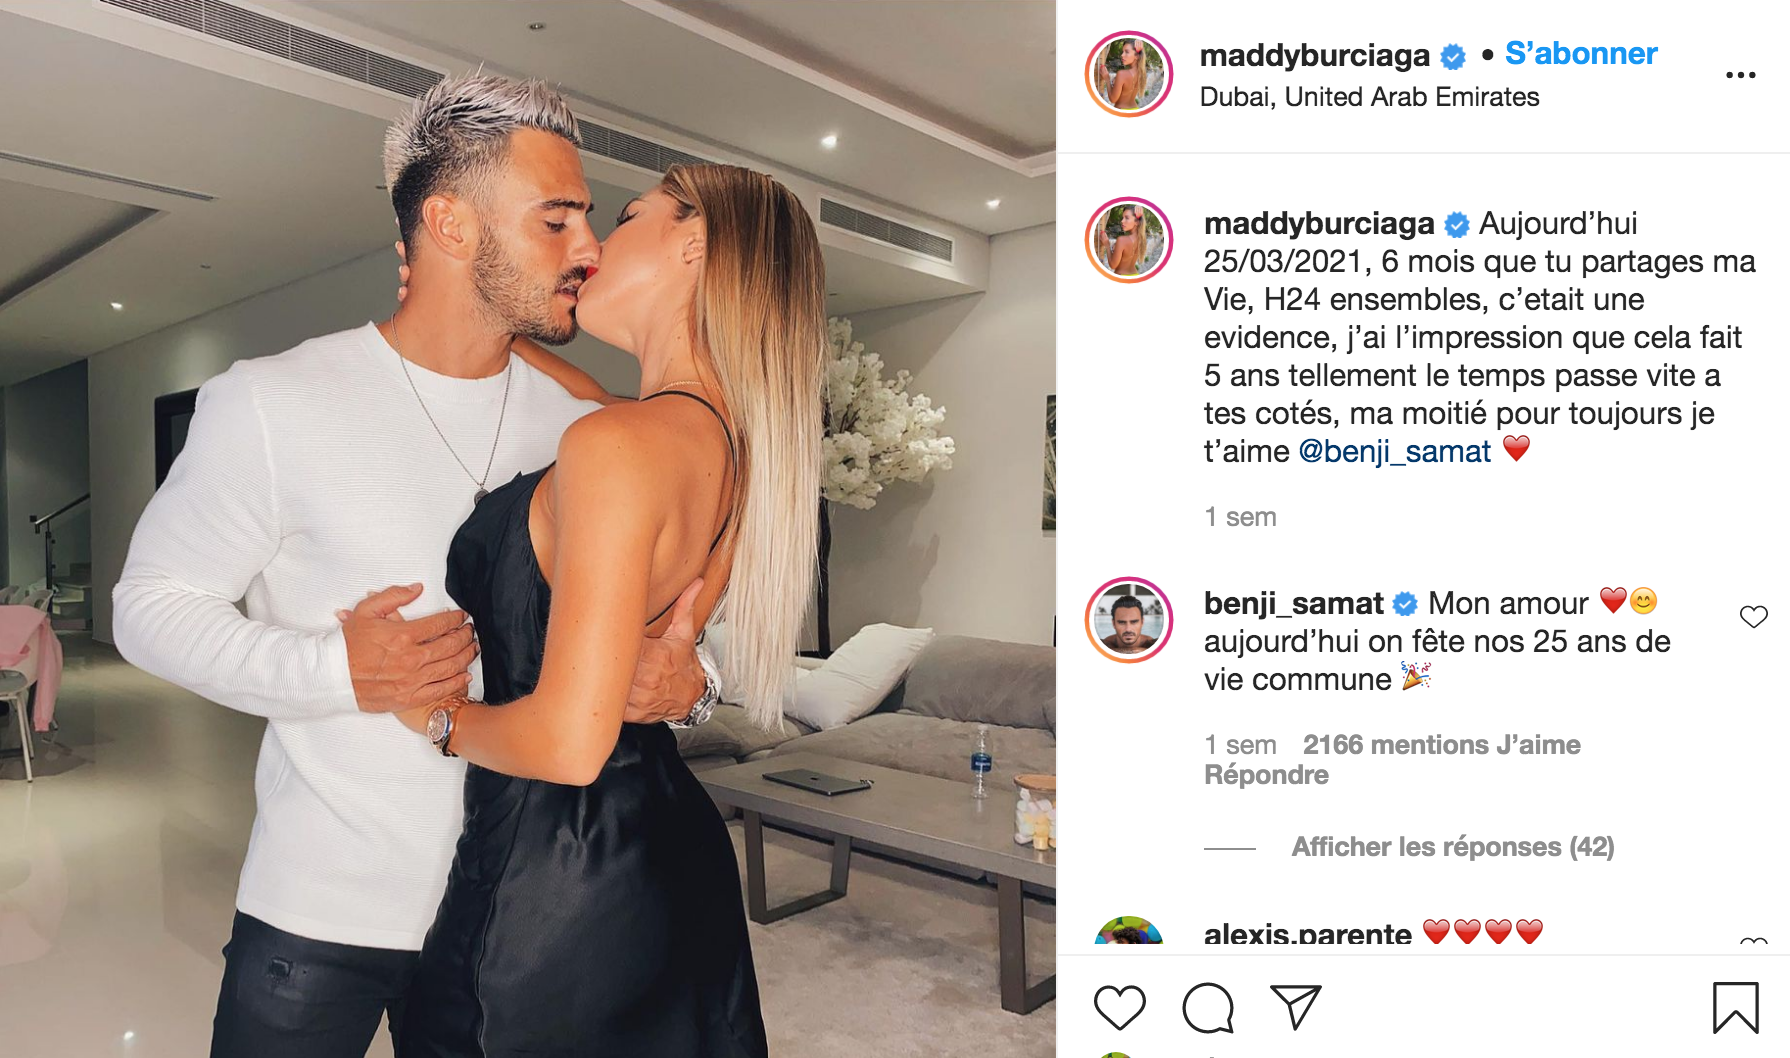  Benjamin Samat et Maddy Burciaga fêtent leur 6 mois @ Instagram